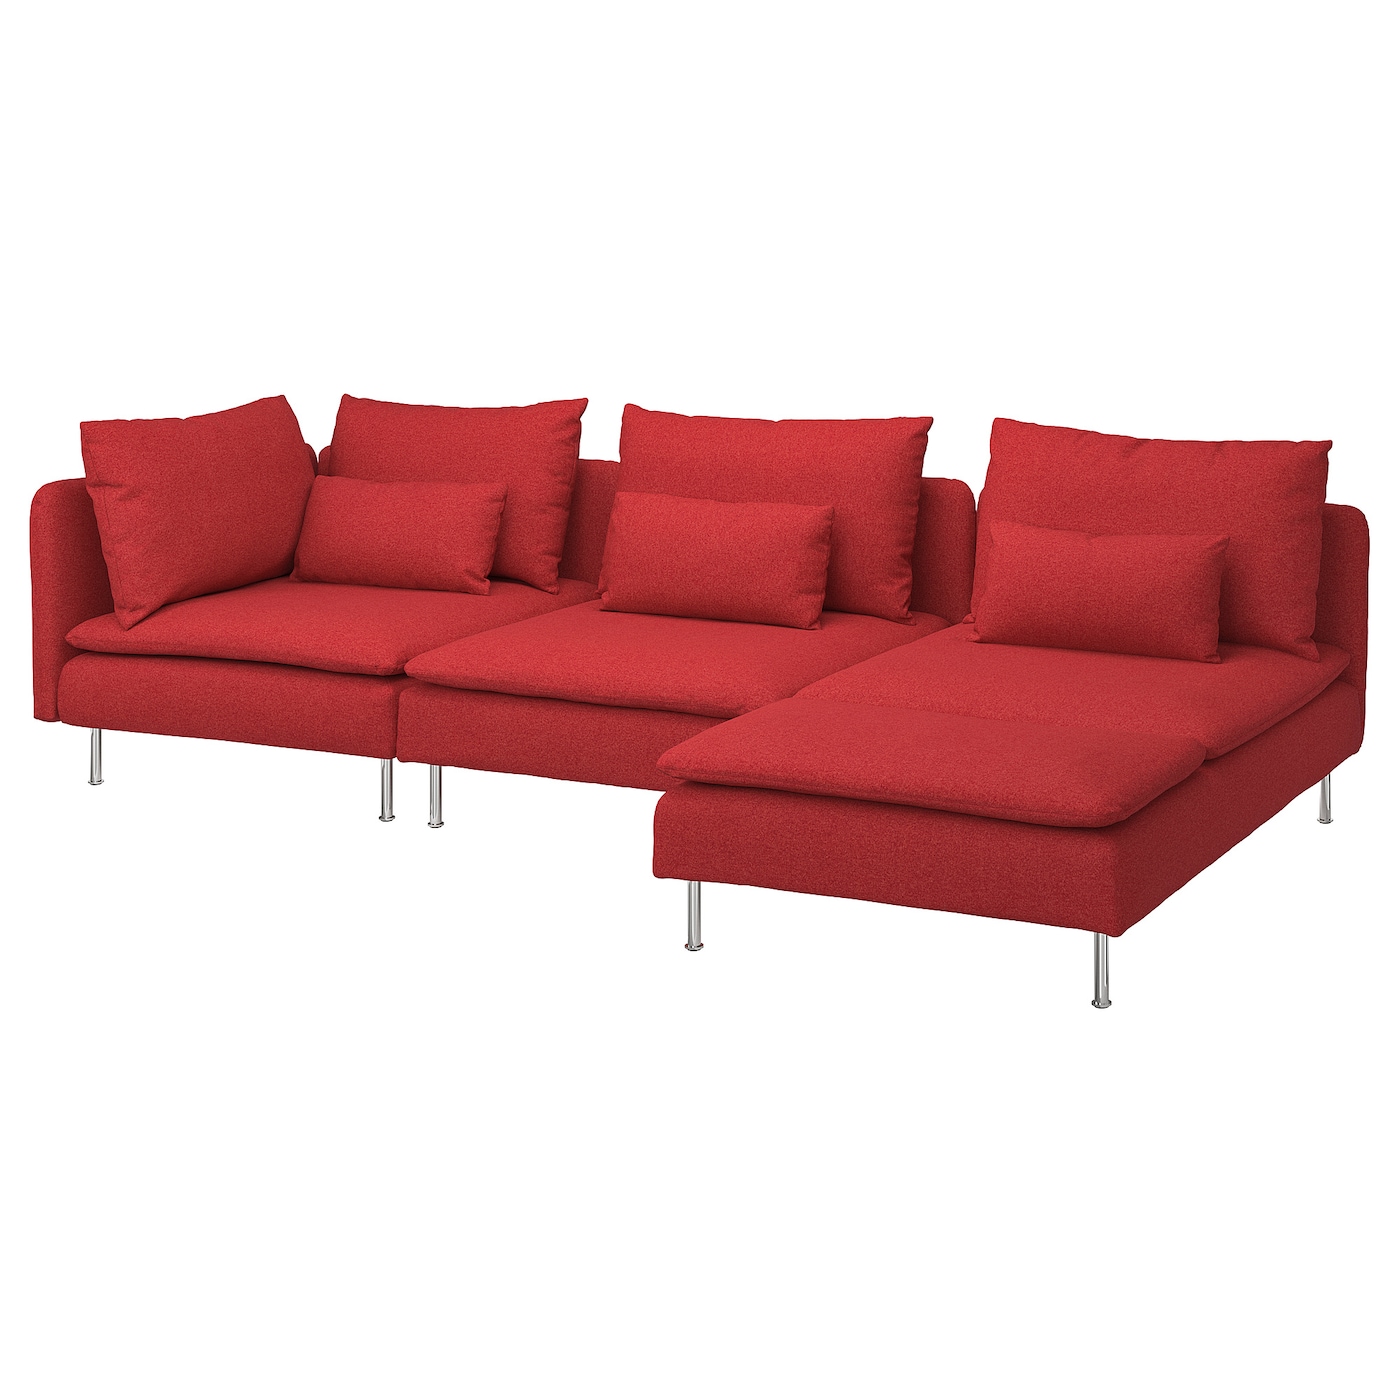 4-местный угловой диван с шезлонгом - IKEA SÖDERHAMN/SODERHAMN/СЁДЕРХАМН ИКЕА, 291/151х69х99 см, красный